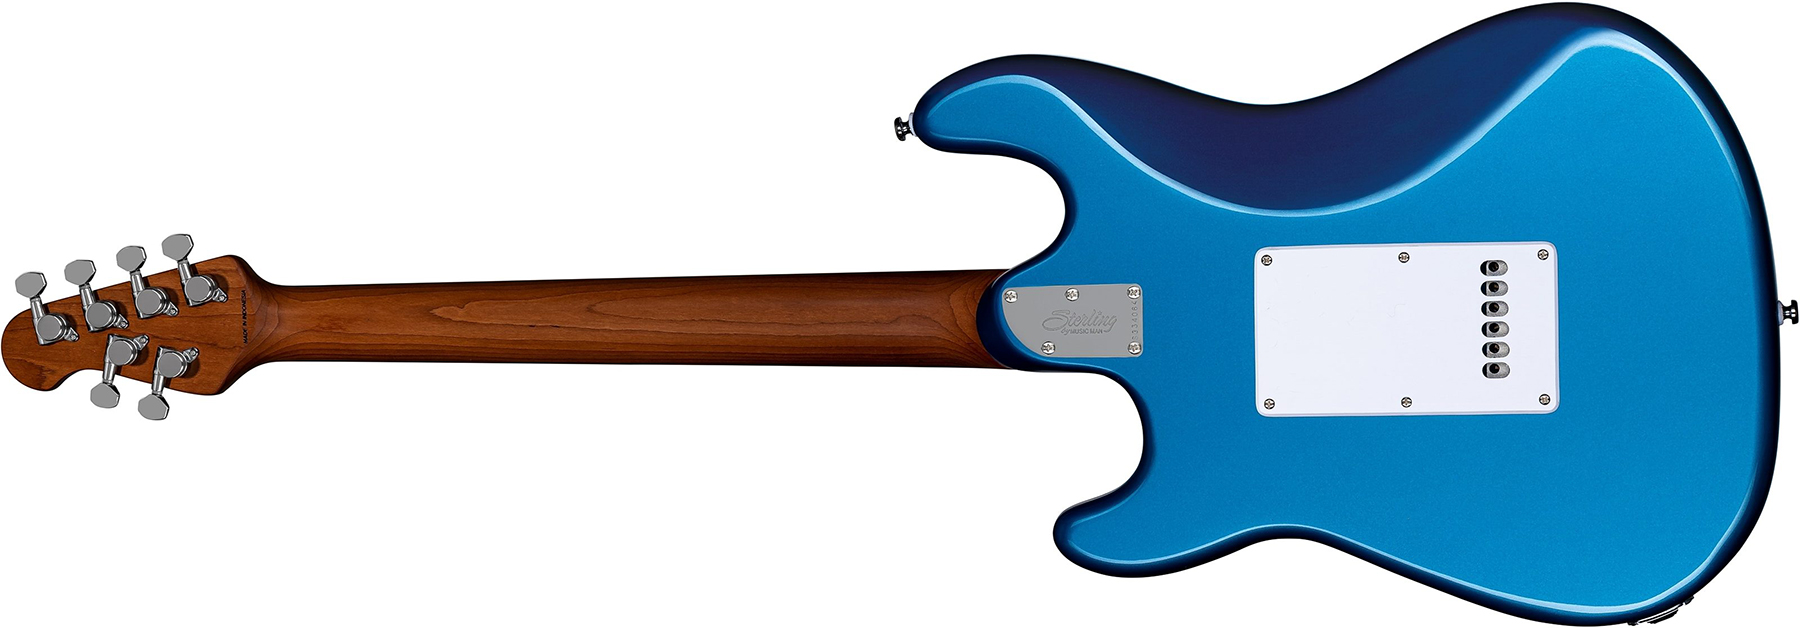 Sterling By Musicman Cutlass Ct50sss 3s Trem Rw - Toluca Lake Blue - Guitarra eléctrica con forma de str. - Variation 1